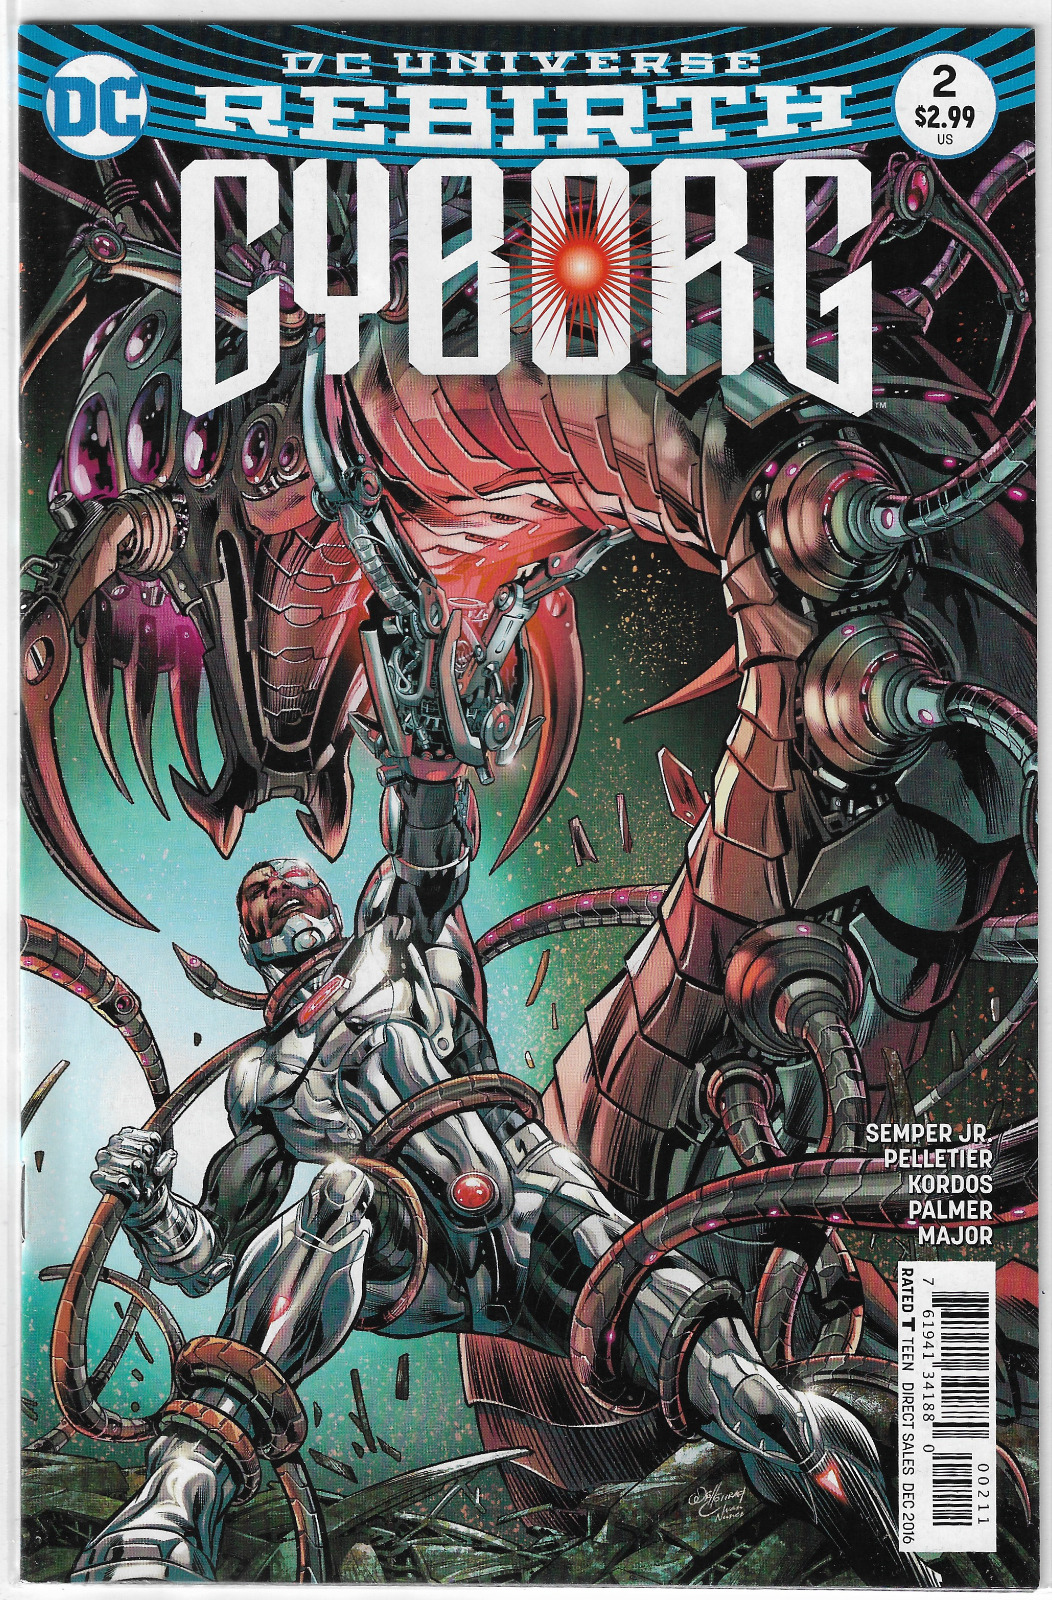 Cyborg (2016) #2 Rebirth DC Comics Justice League